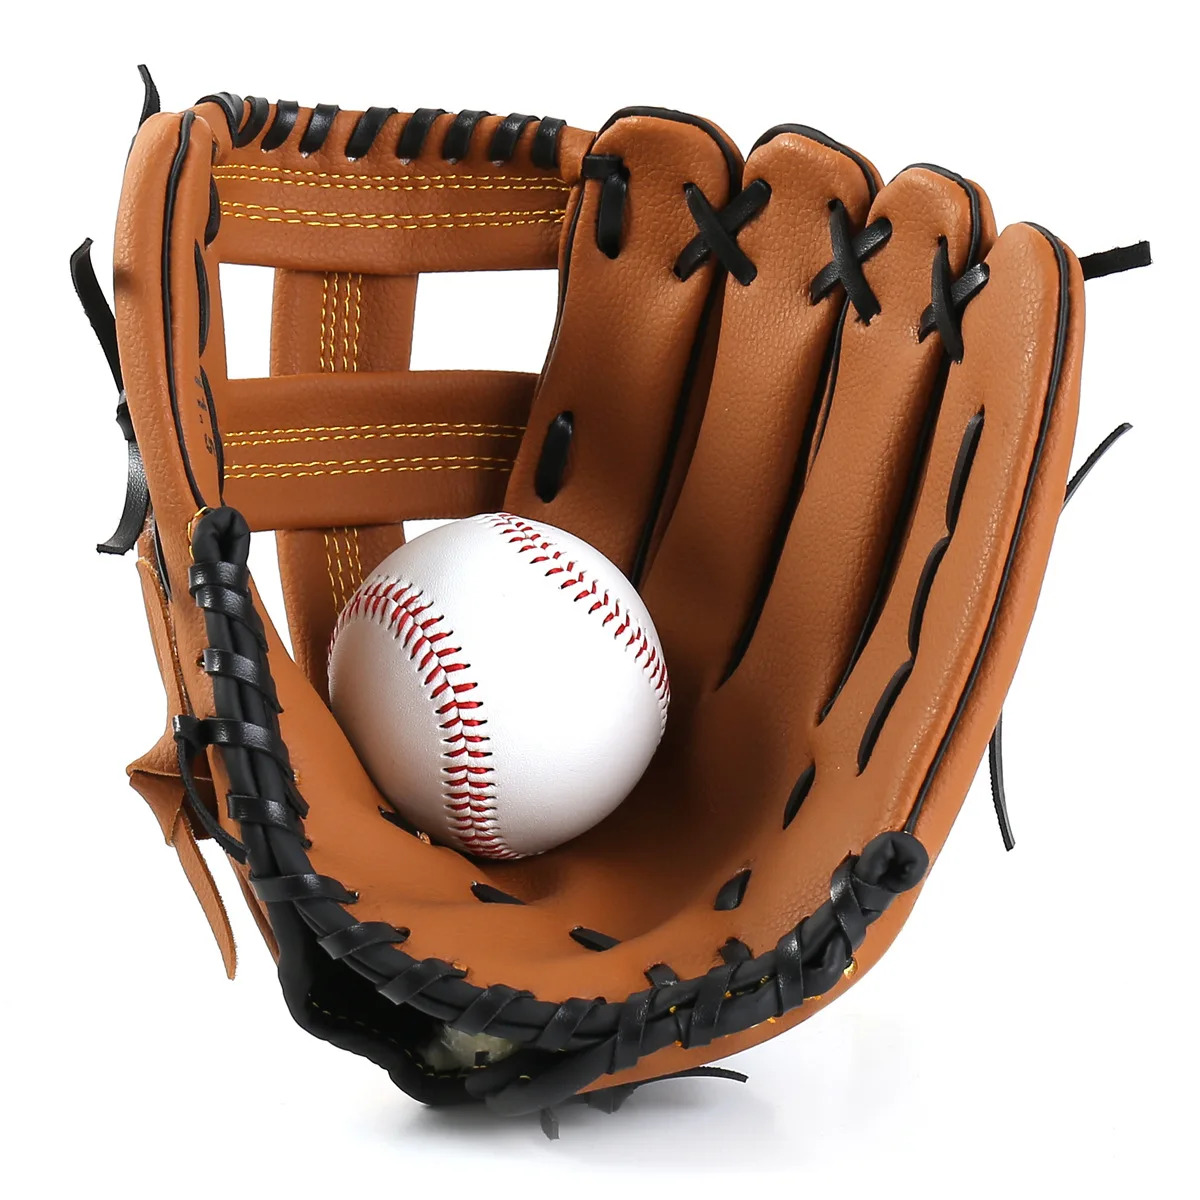 

Baseball Glove Outdoor Sports Pitcher Glove for Kids Adult PU Softball Practice Equipment Baseball Training Competition Glove